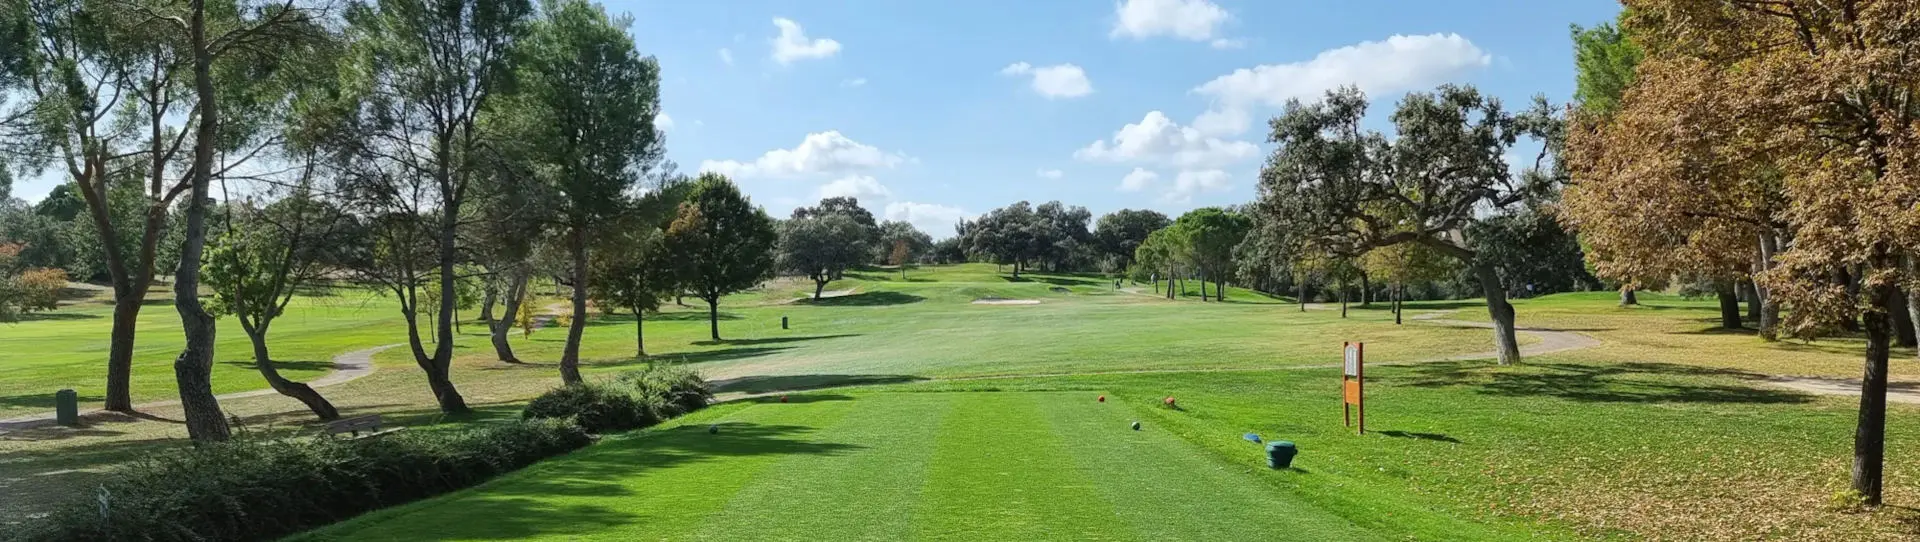 Spain golf courses - Jarama R.A.C.E. Golf Course - Photo 2